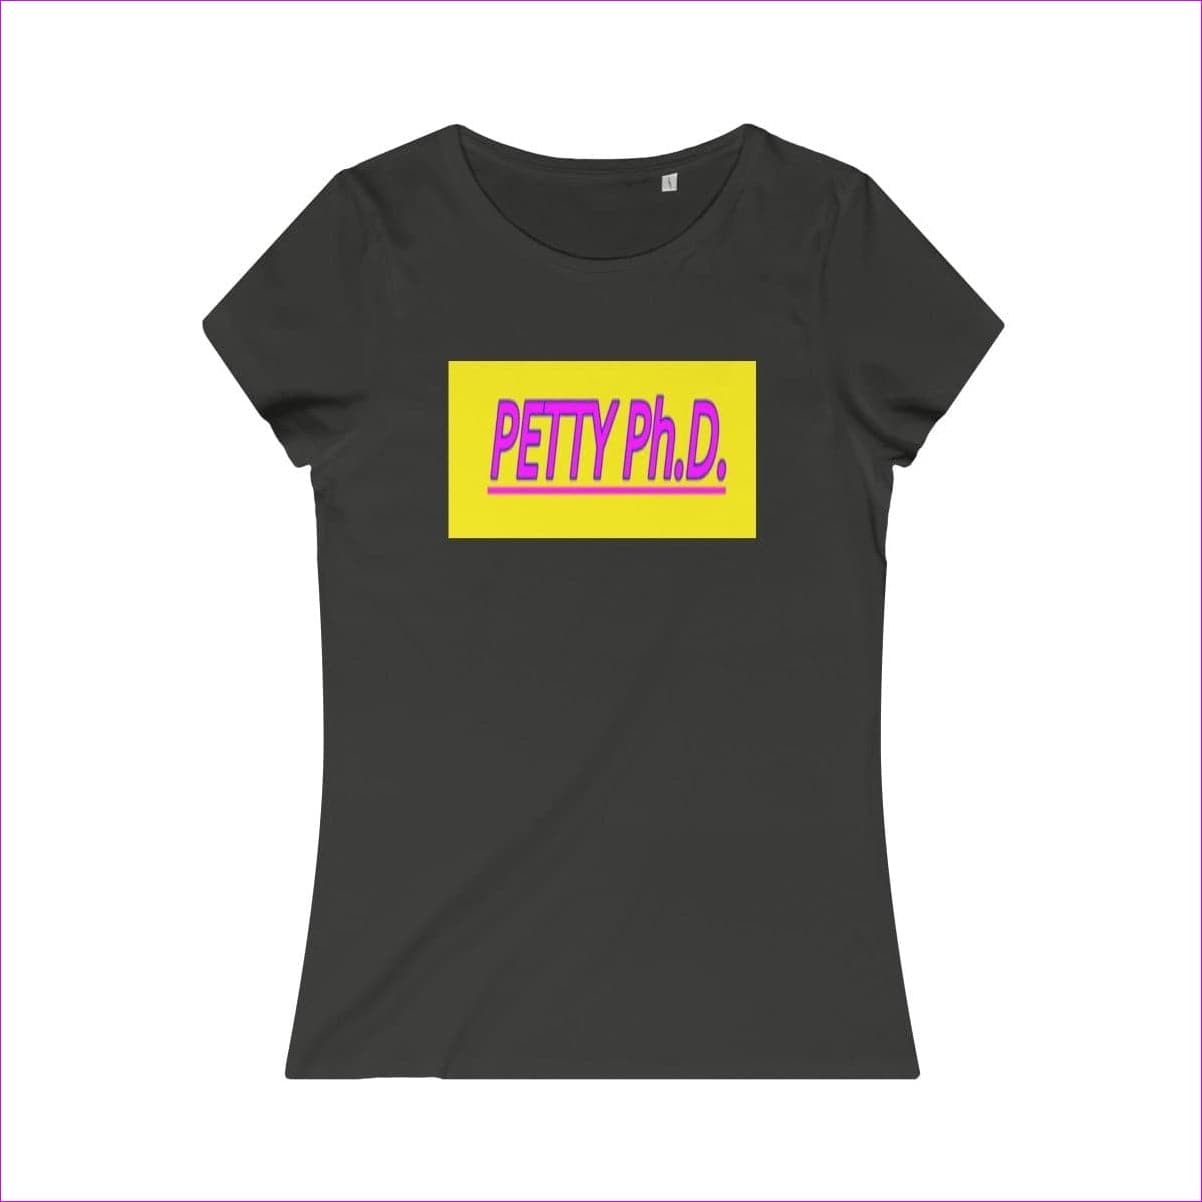 Anthracite Petty Ph.d. Womens Organic Tee 2 - Women's T-Shirt at TFC&H Co.